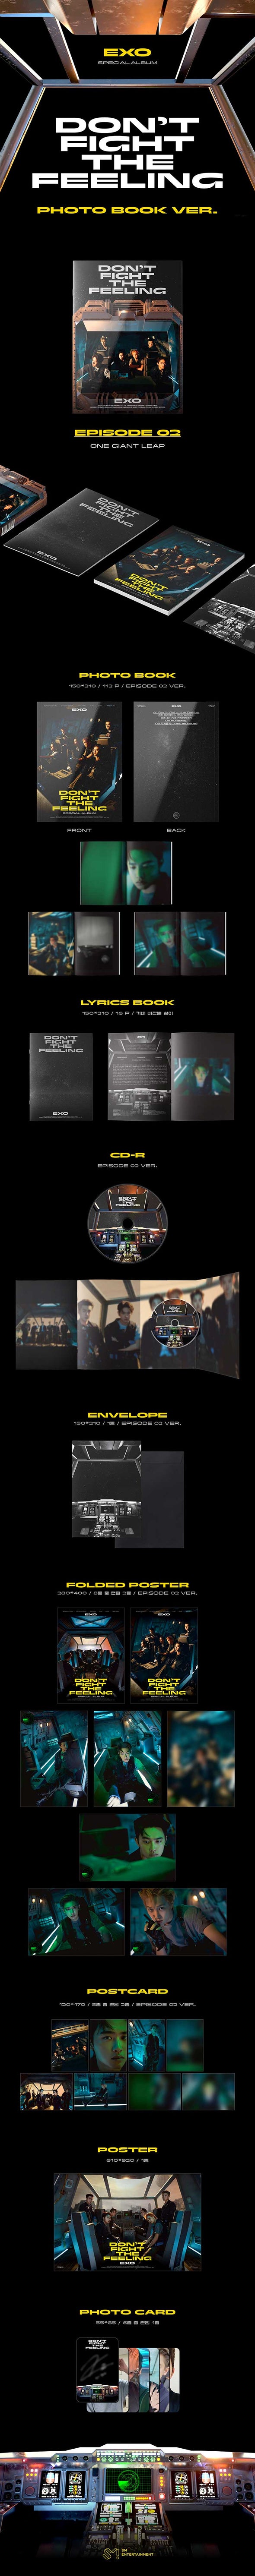 EXO Special Album - DON’T FIGHT THE FEELING - Photobook Version 2 - Kpop Music 사랑해요